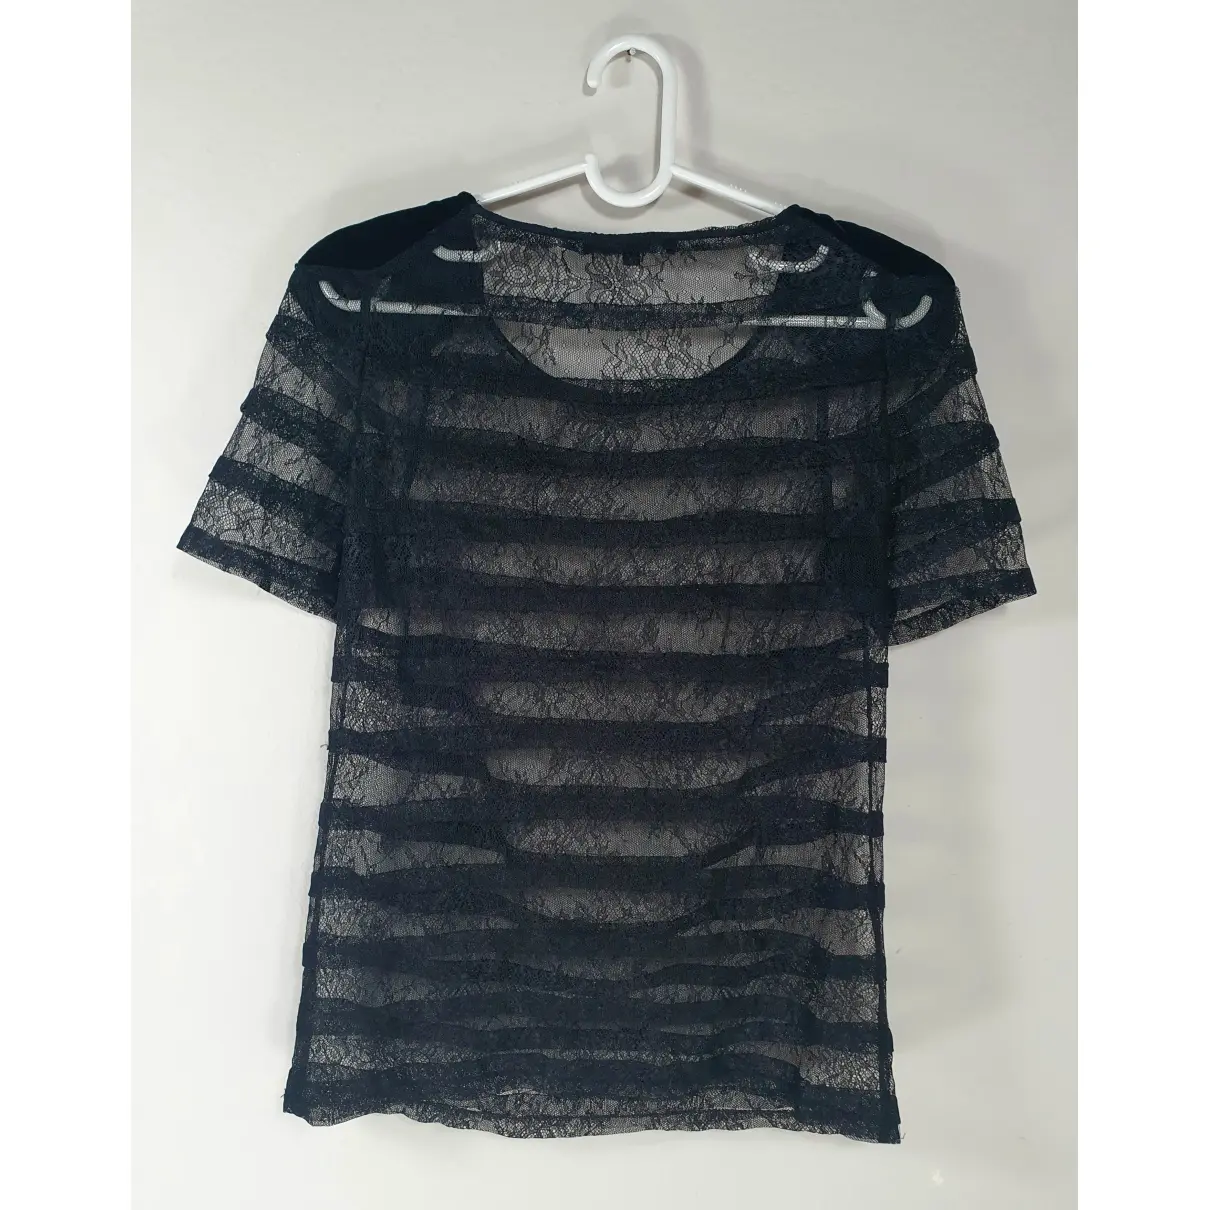 Buy Tara Jarmon Lace blouse online